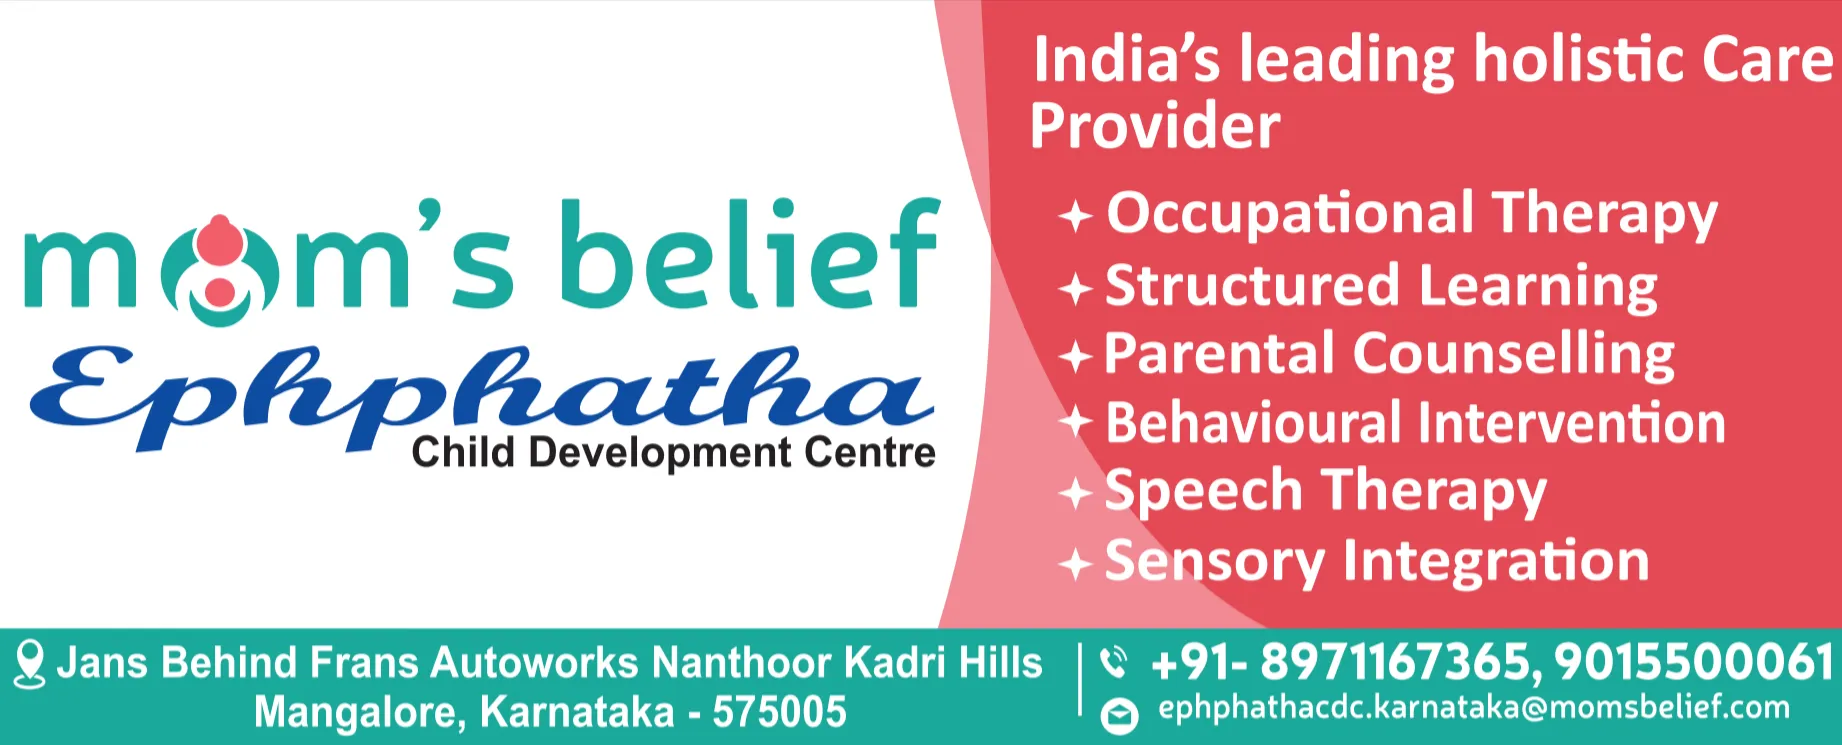 Mom’s belief Ephphatha Child Development Centre